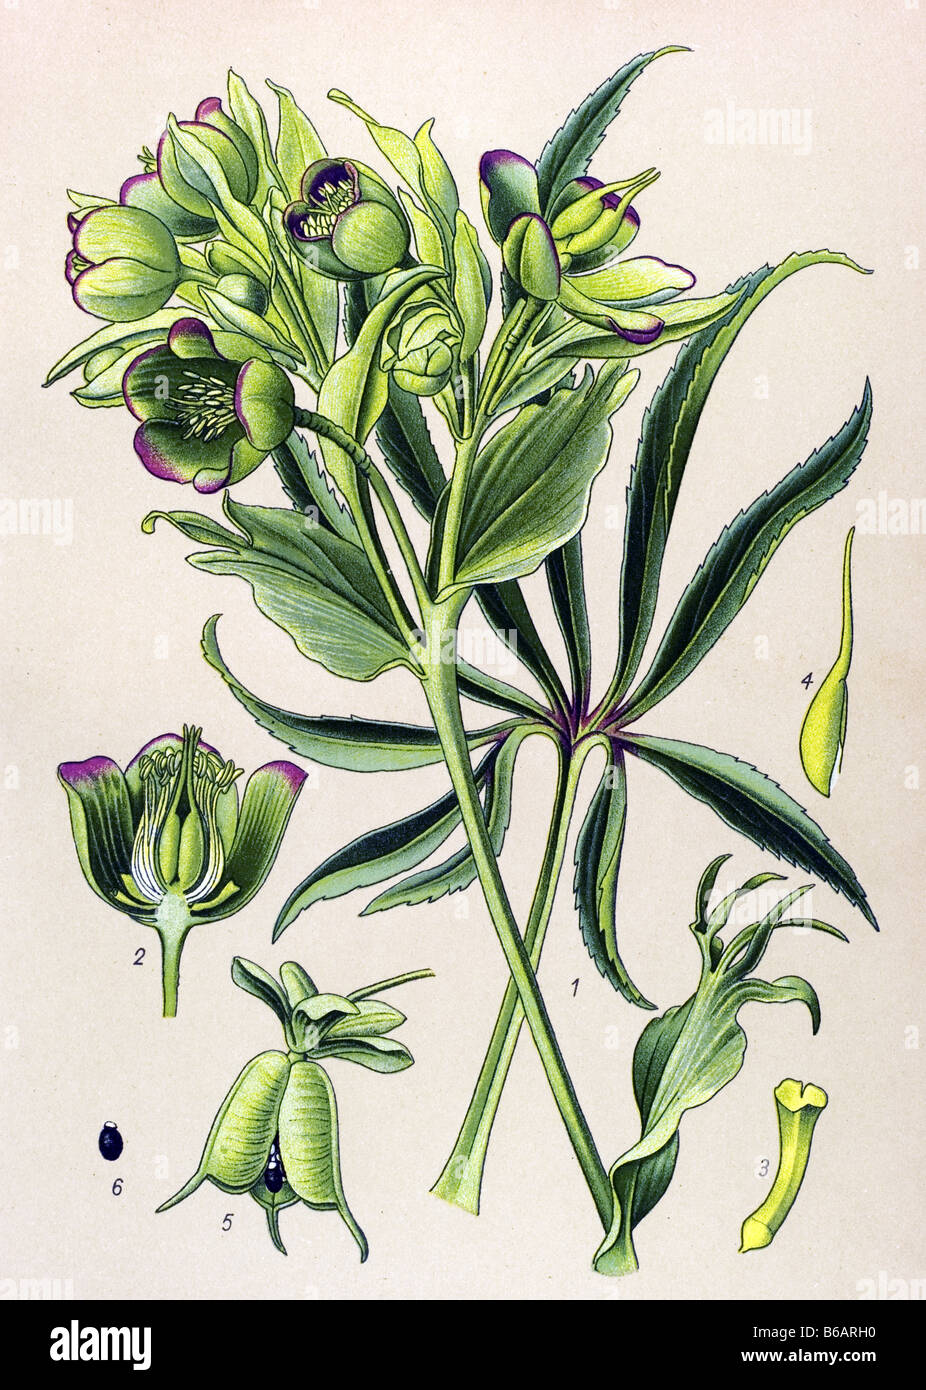 Stinking hellebore, Helleborus foetidus, poisonous plants illustrations Stock Photo